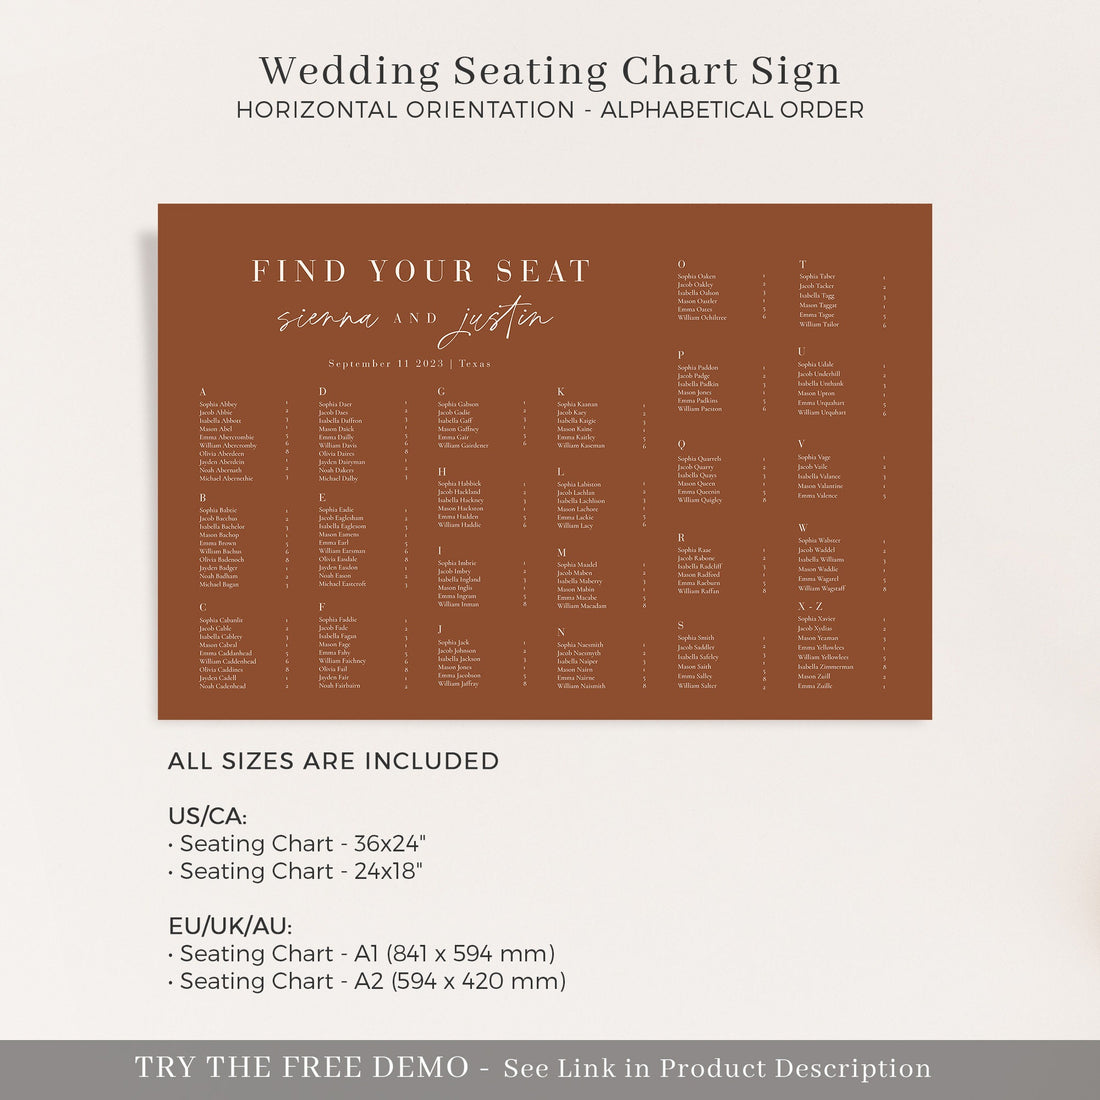 SIENNA Alphabetical Seating Chart Wedding Template